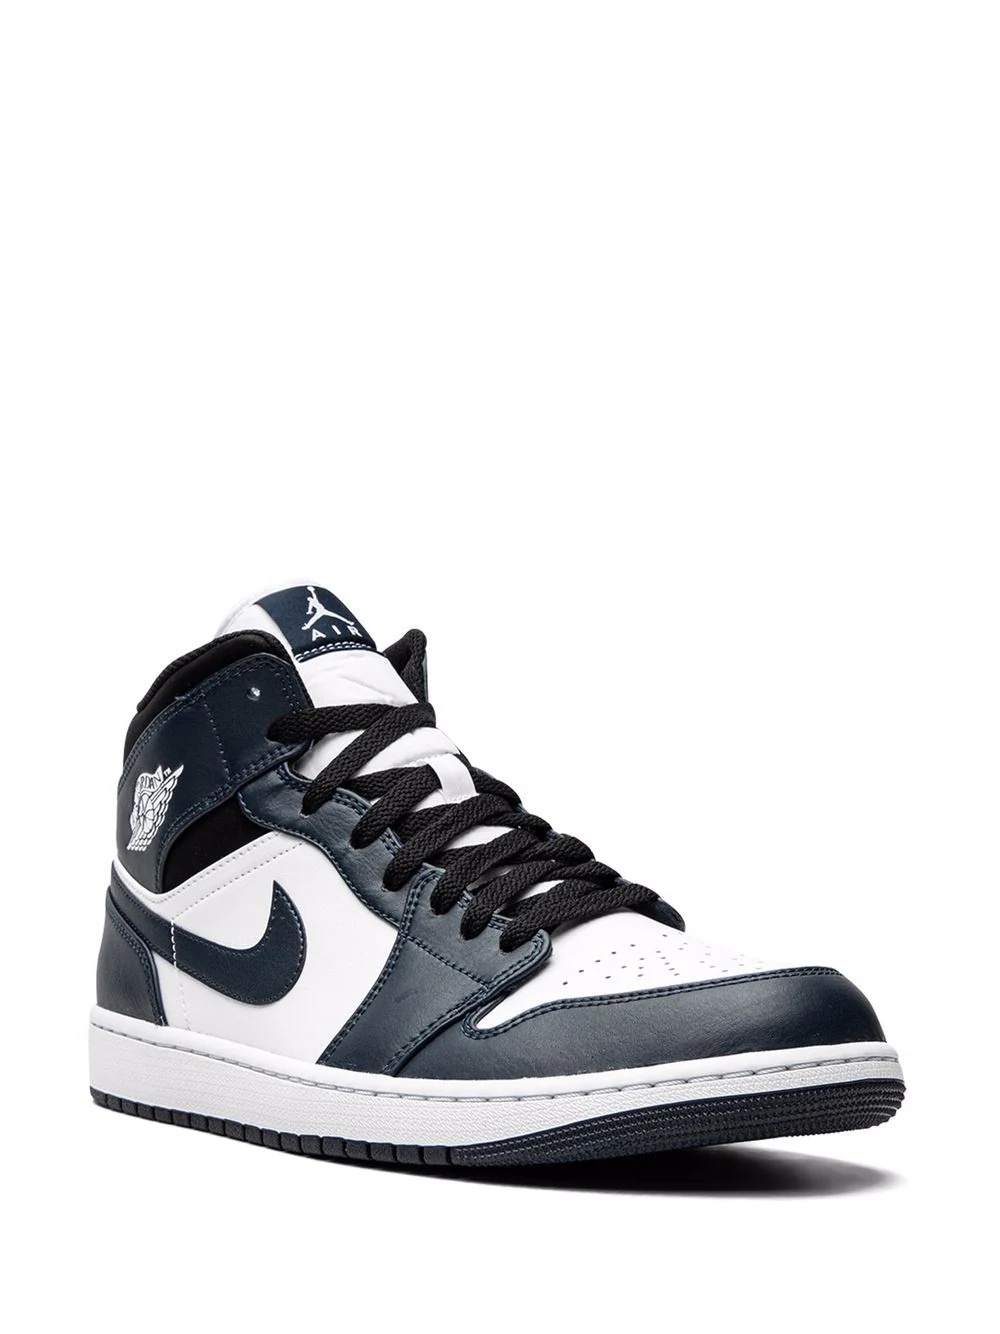 Jordan 1 Mid sneakers - 2